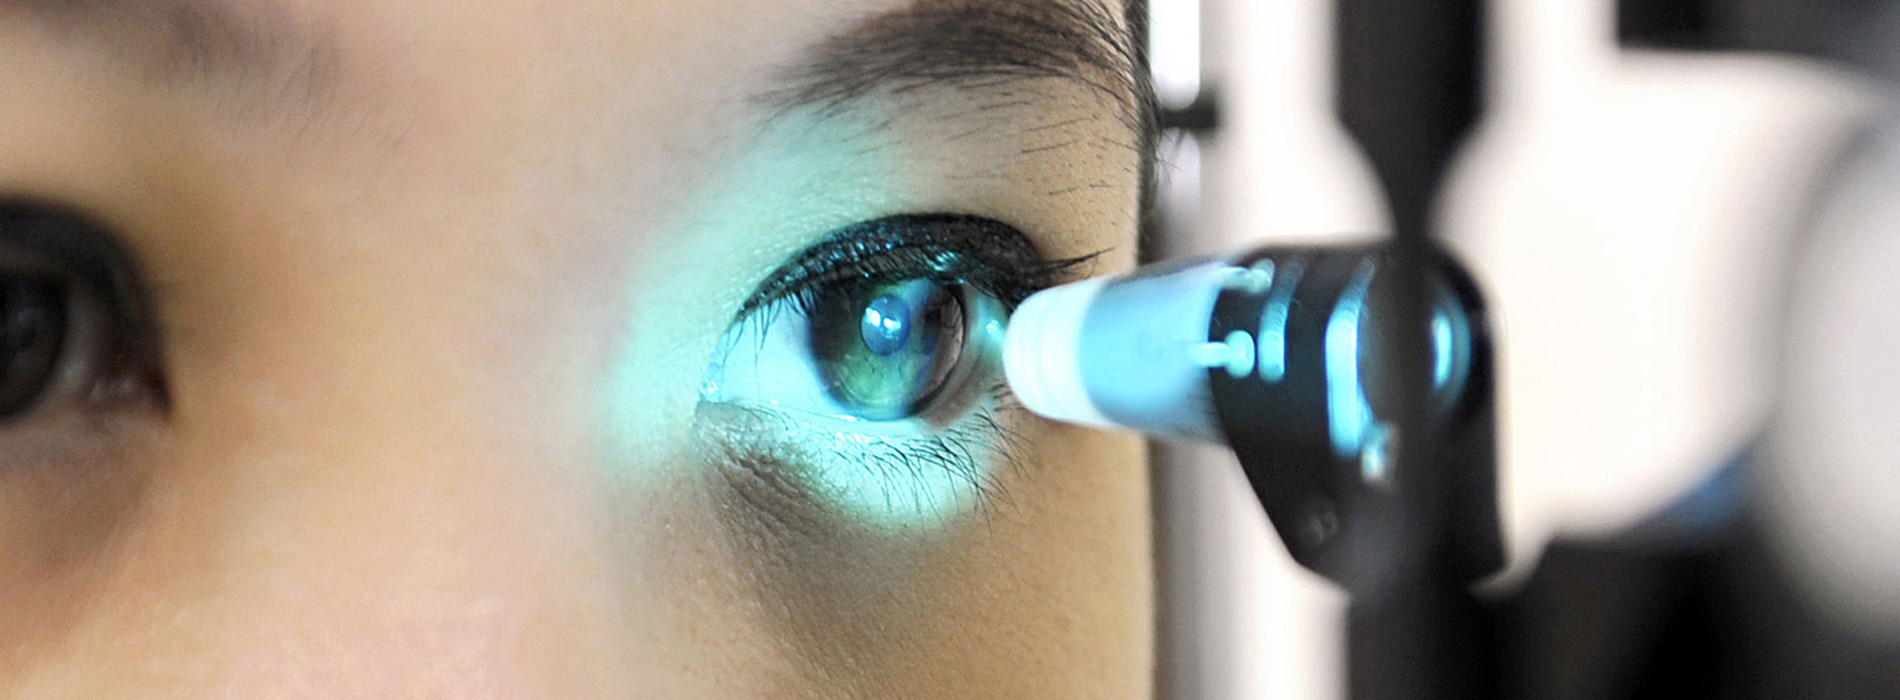 Vision Quest | Pediatric Eye Care, Eyeglass Repair and Macular Degeneration Screening